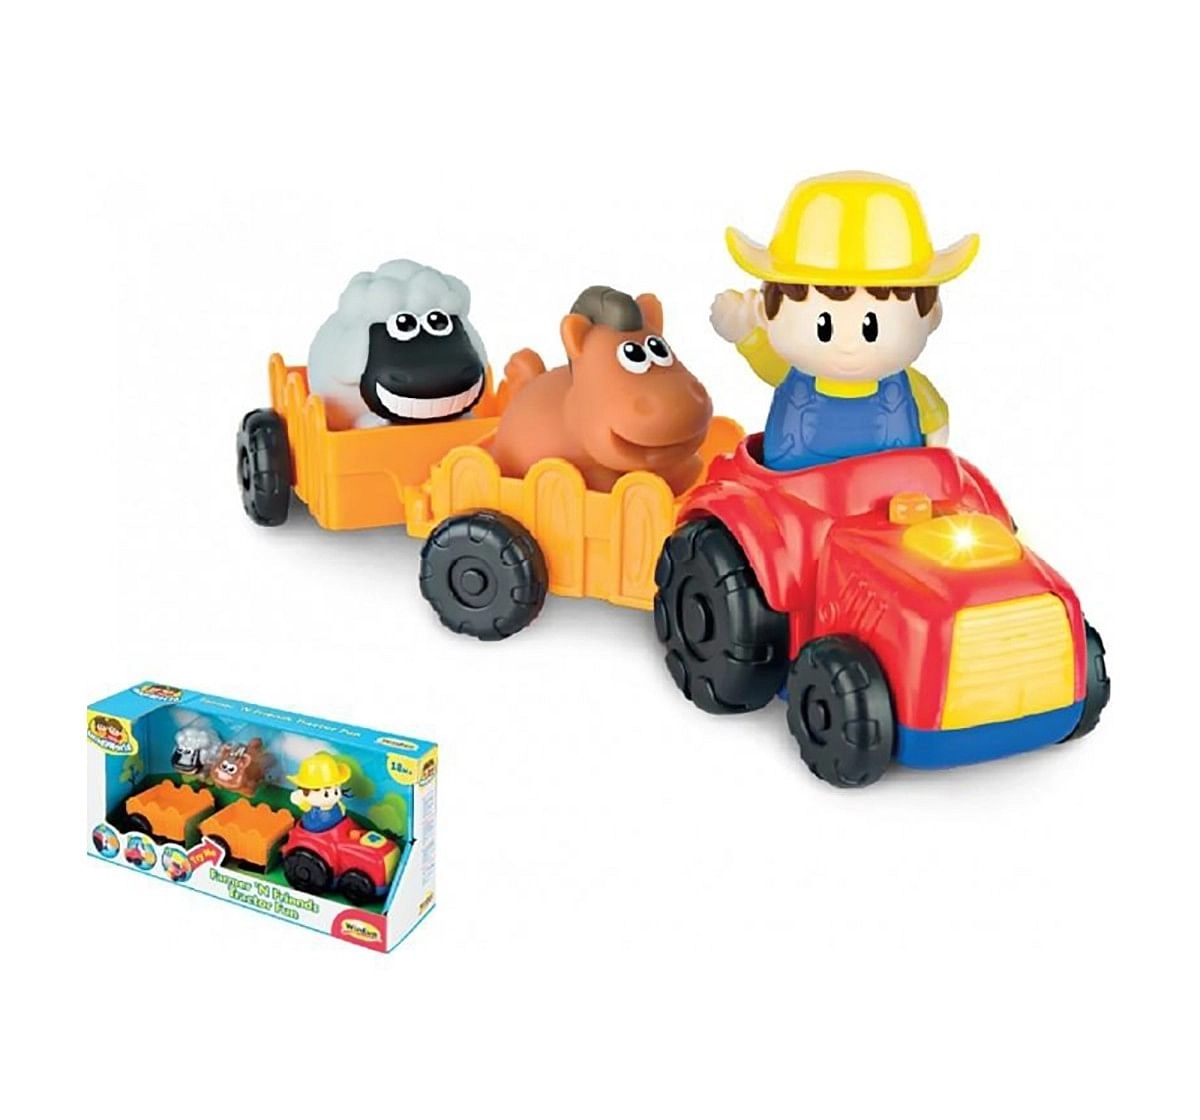  Winfun - Farmer Friend Tractor Fun Learning Toys for Kids age 18M + 